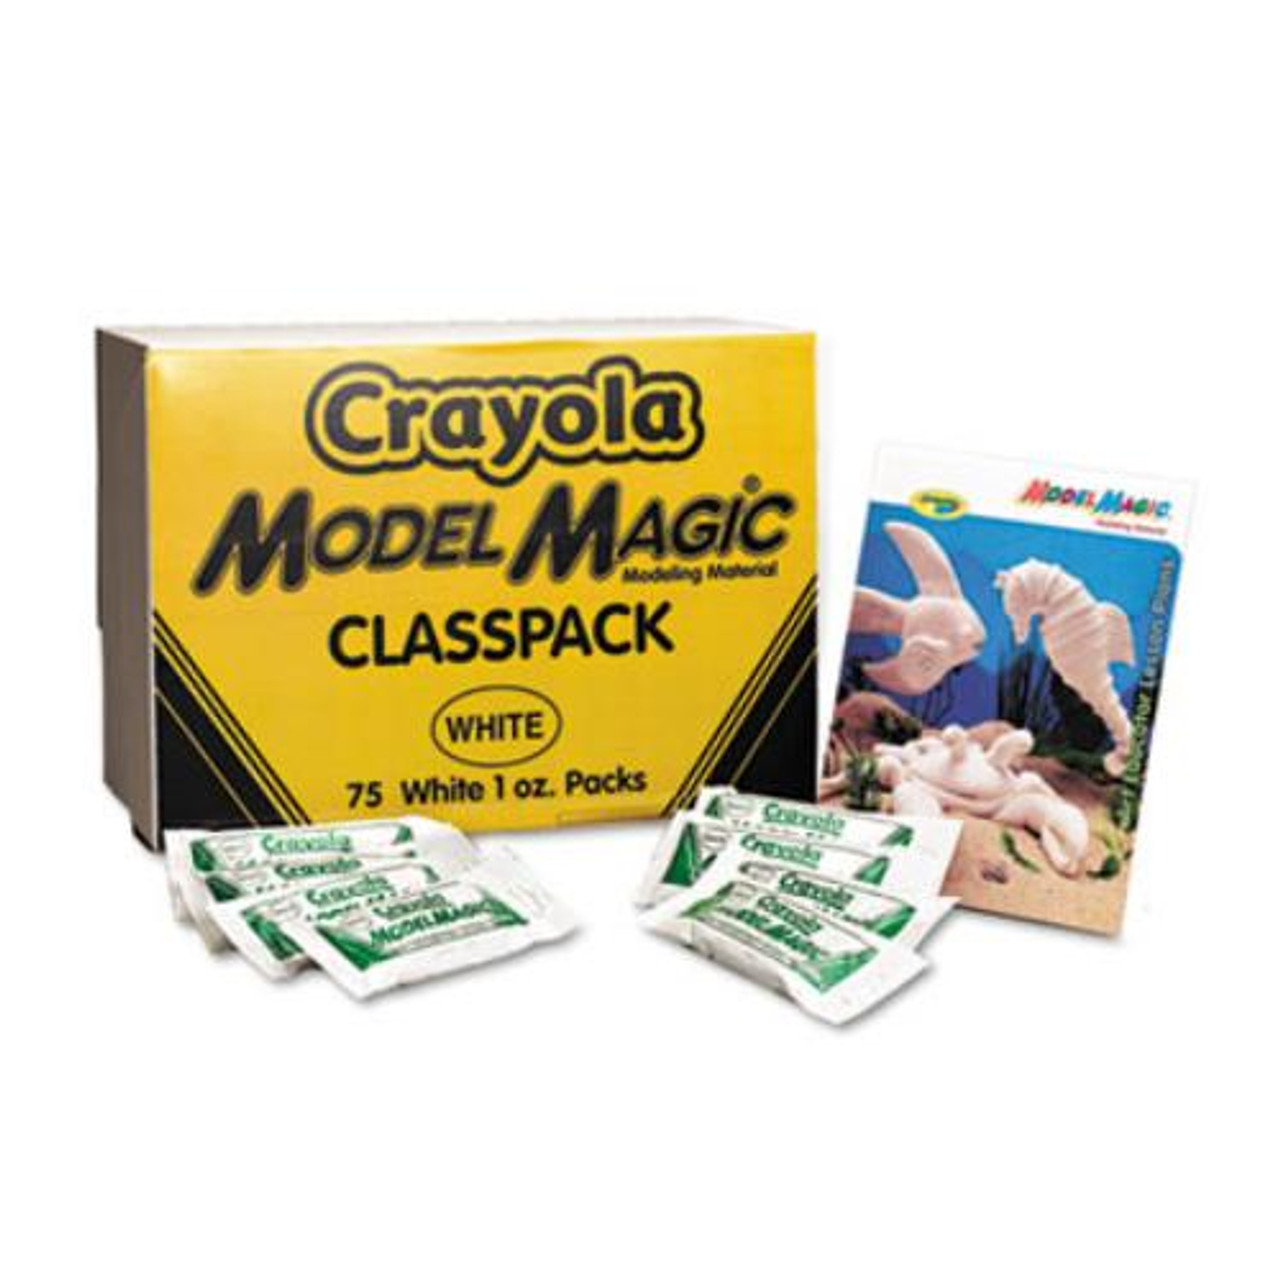 Crayola Model Magic White Classpack - 75 Piece[s] 